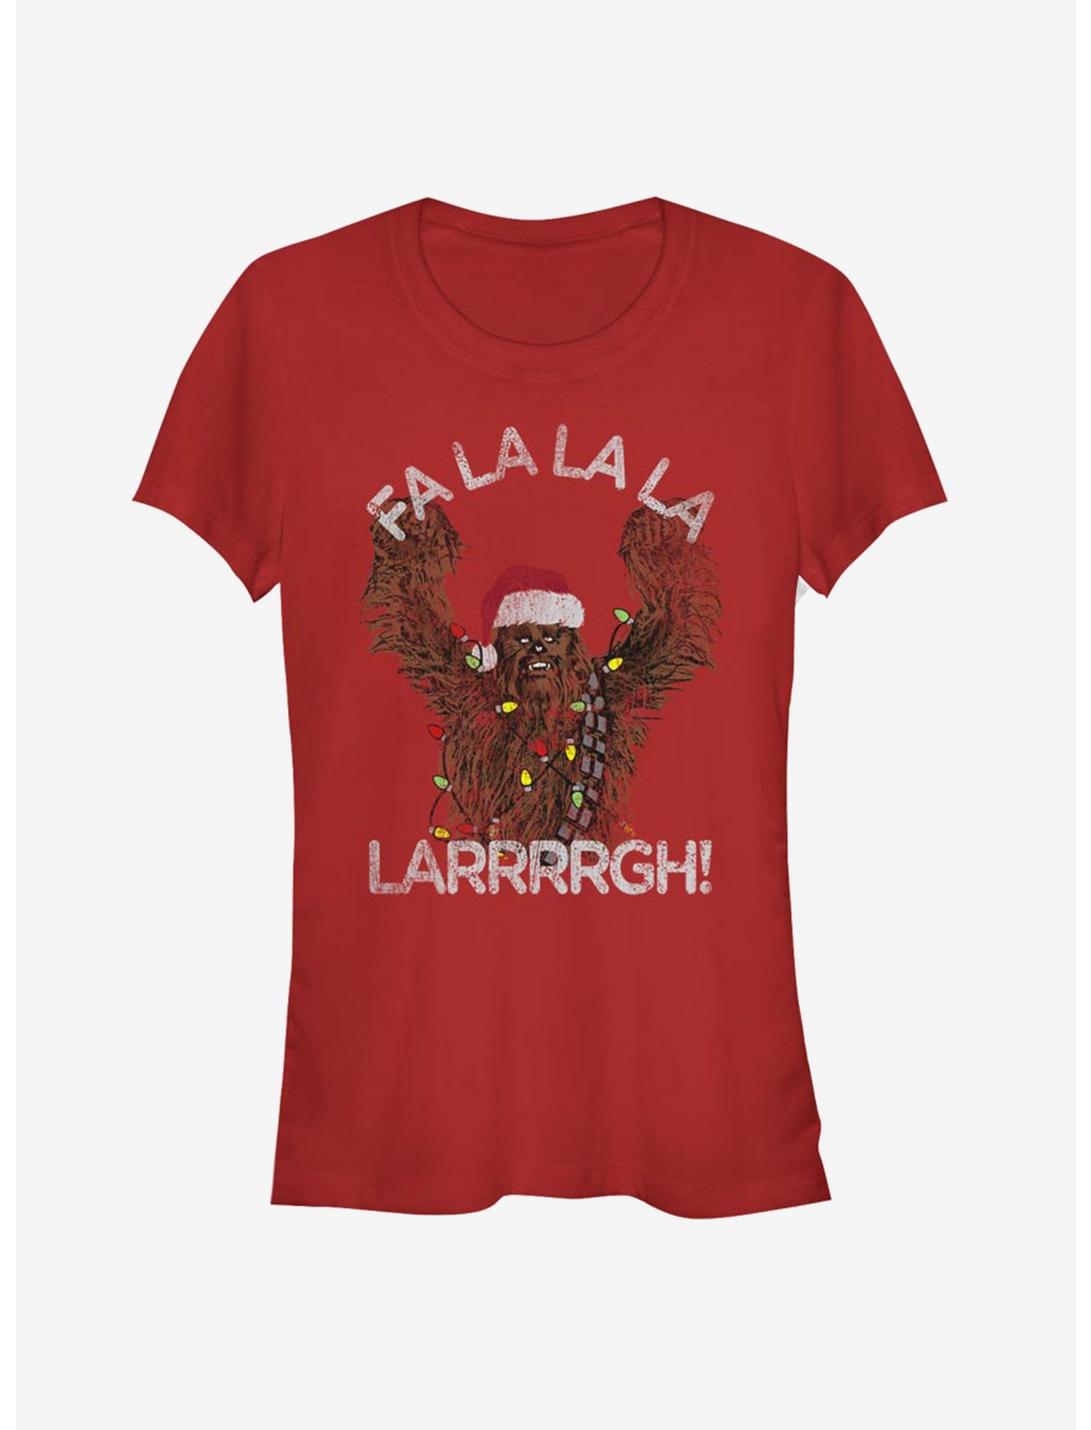 Star Wars Santa Chewie Chewbacca Fa La Larrrrgh Girls T-Shirt, RED, hi-res